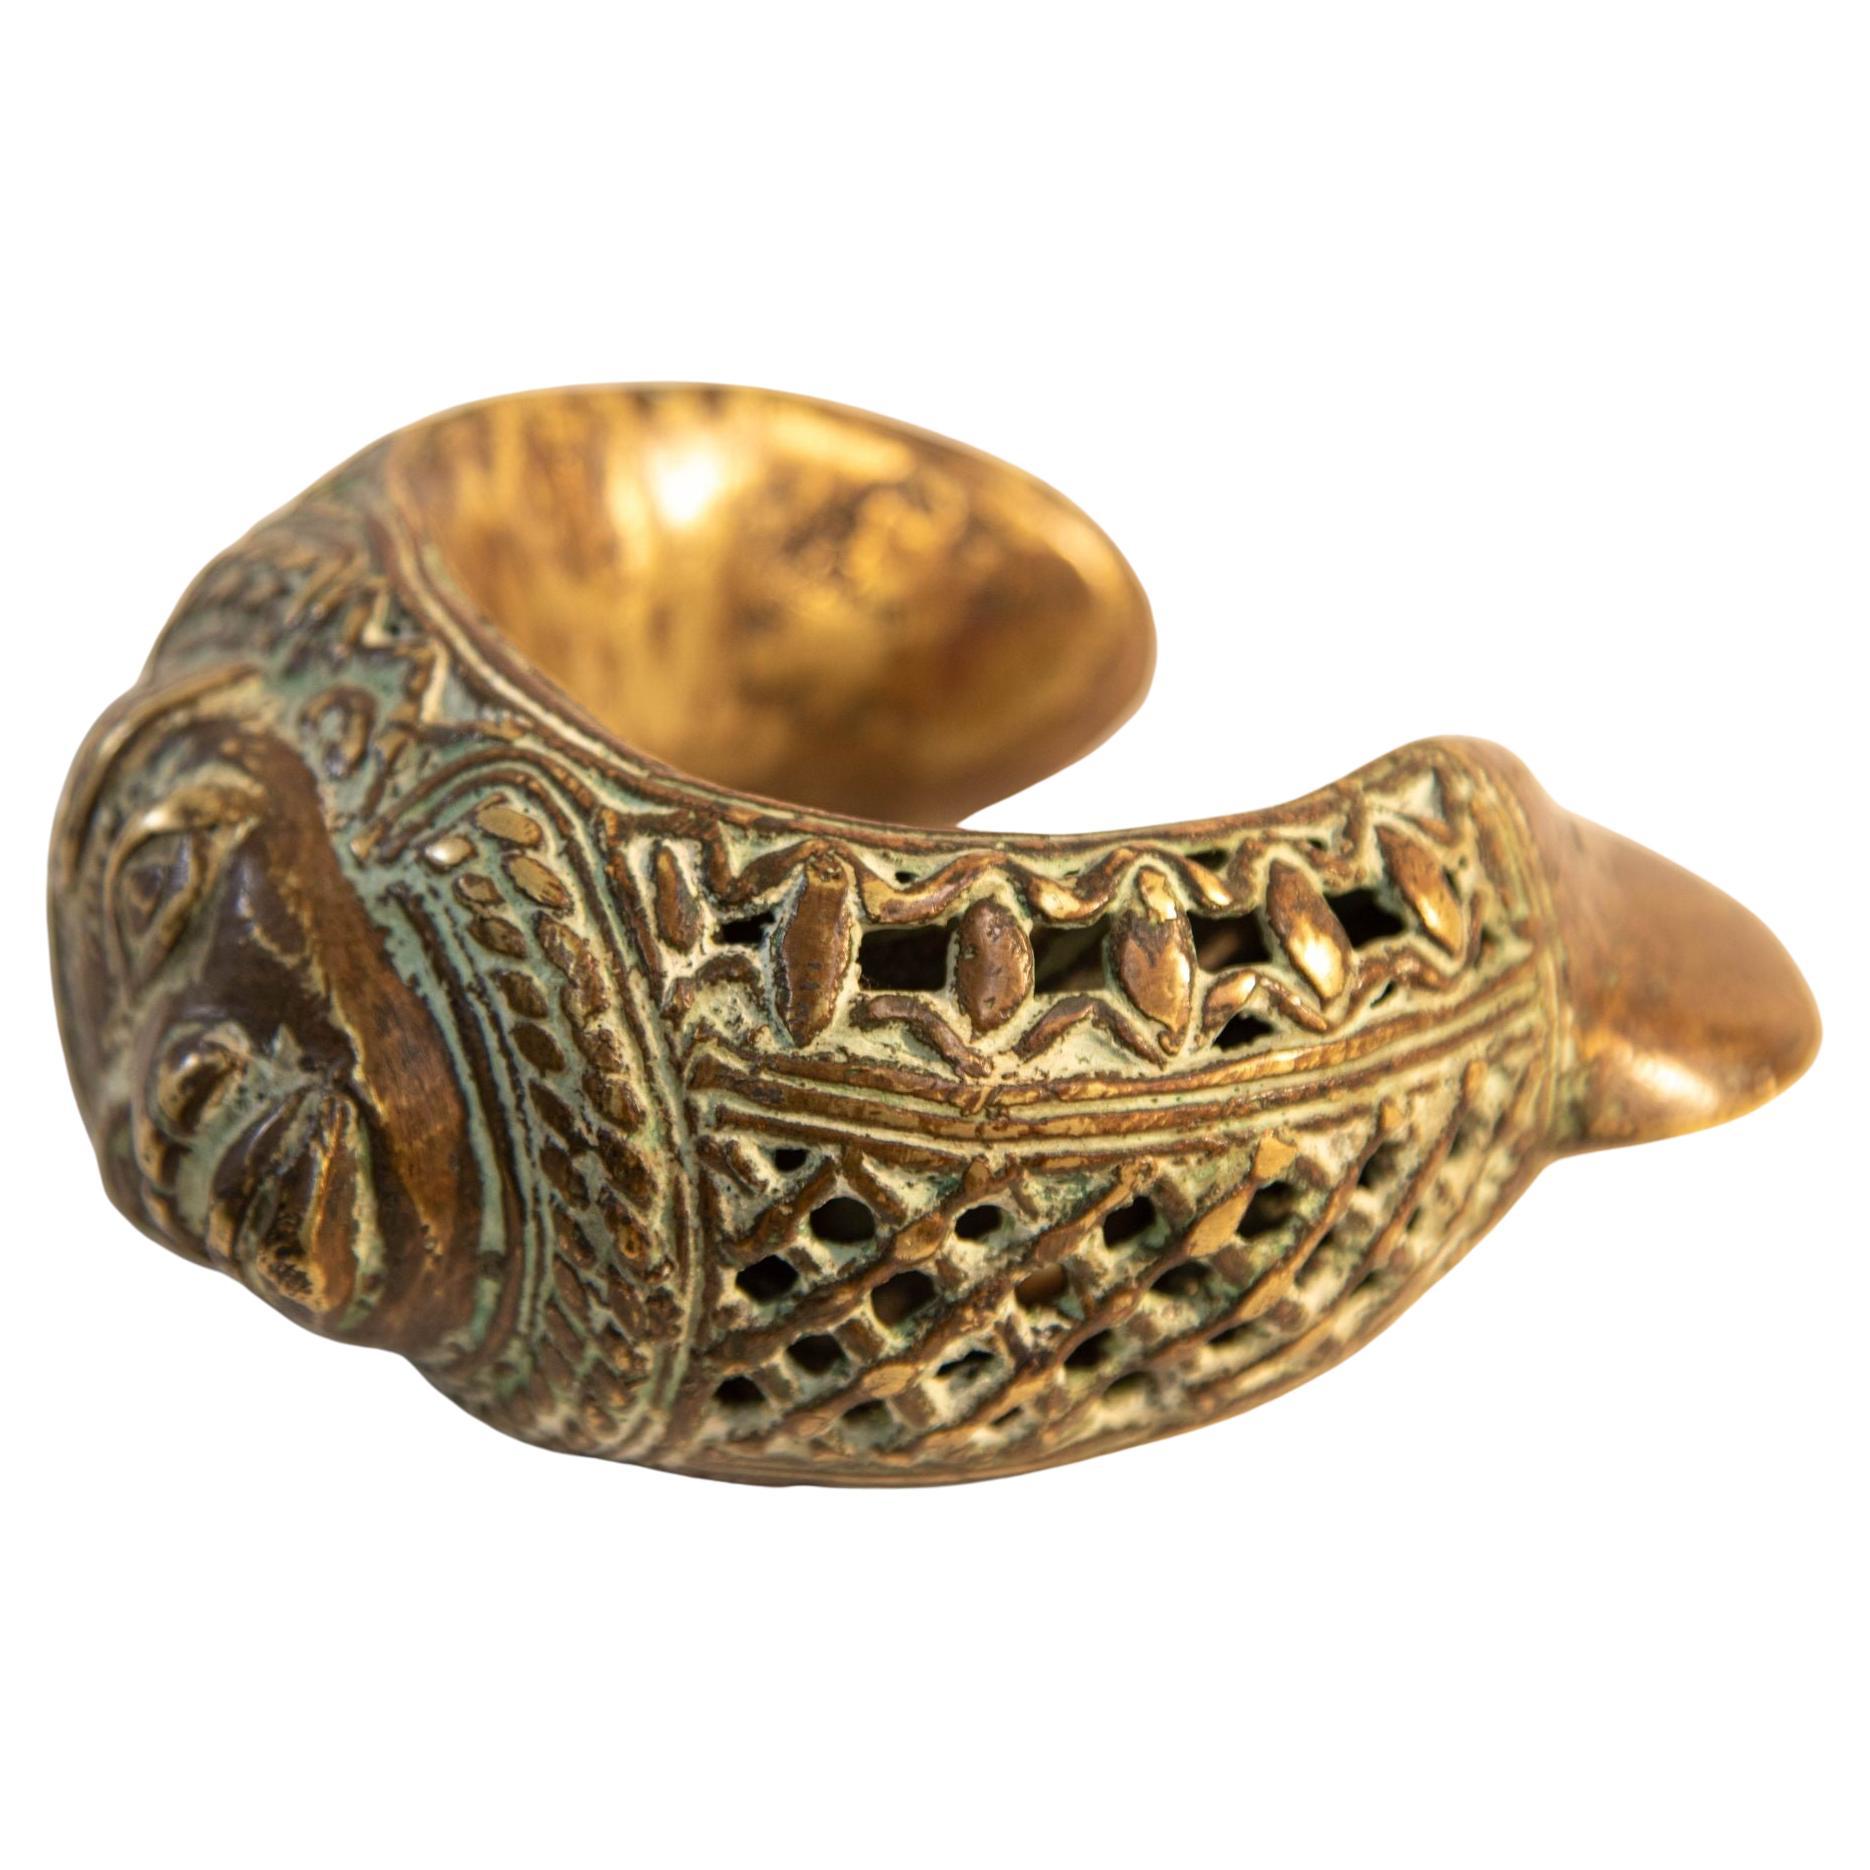 Bracelet jonc de style africain ancien en bronze, artefact tribal